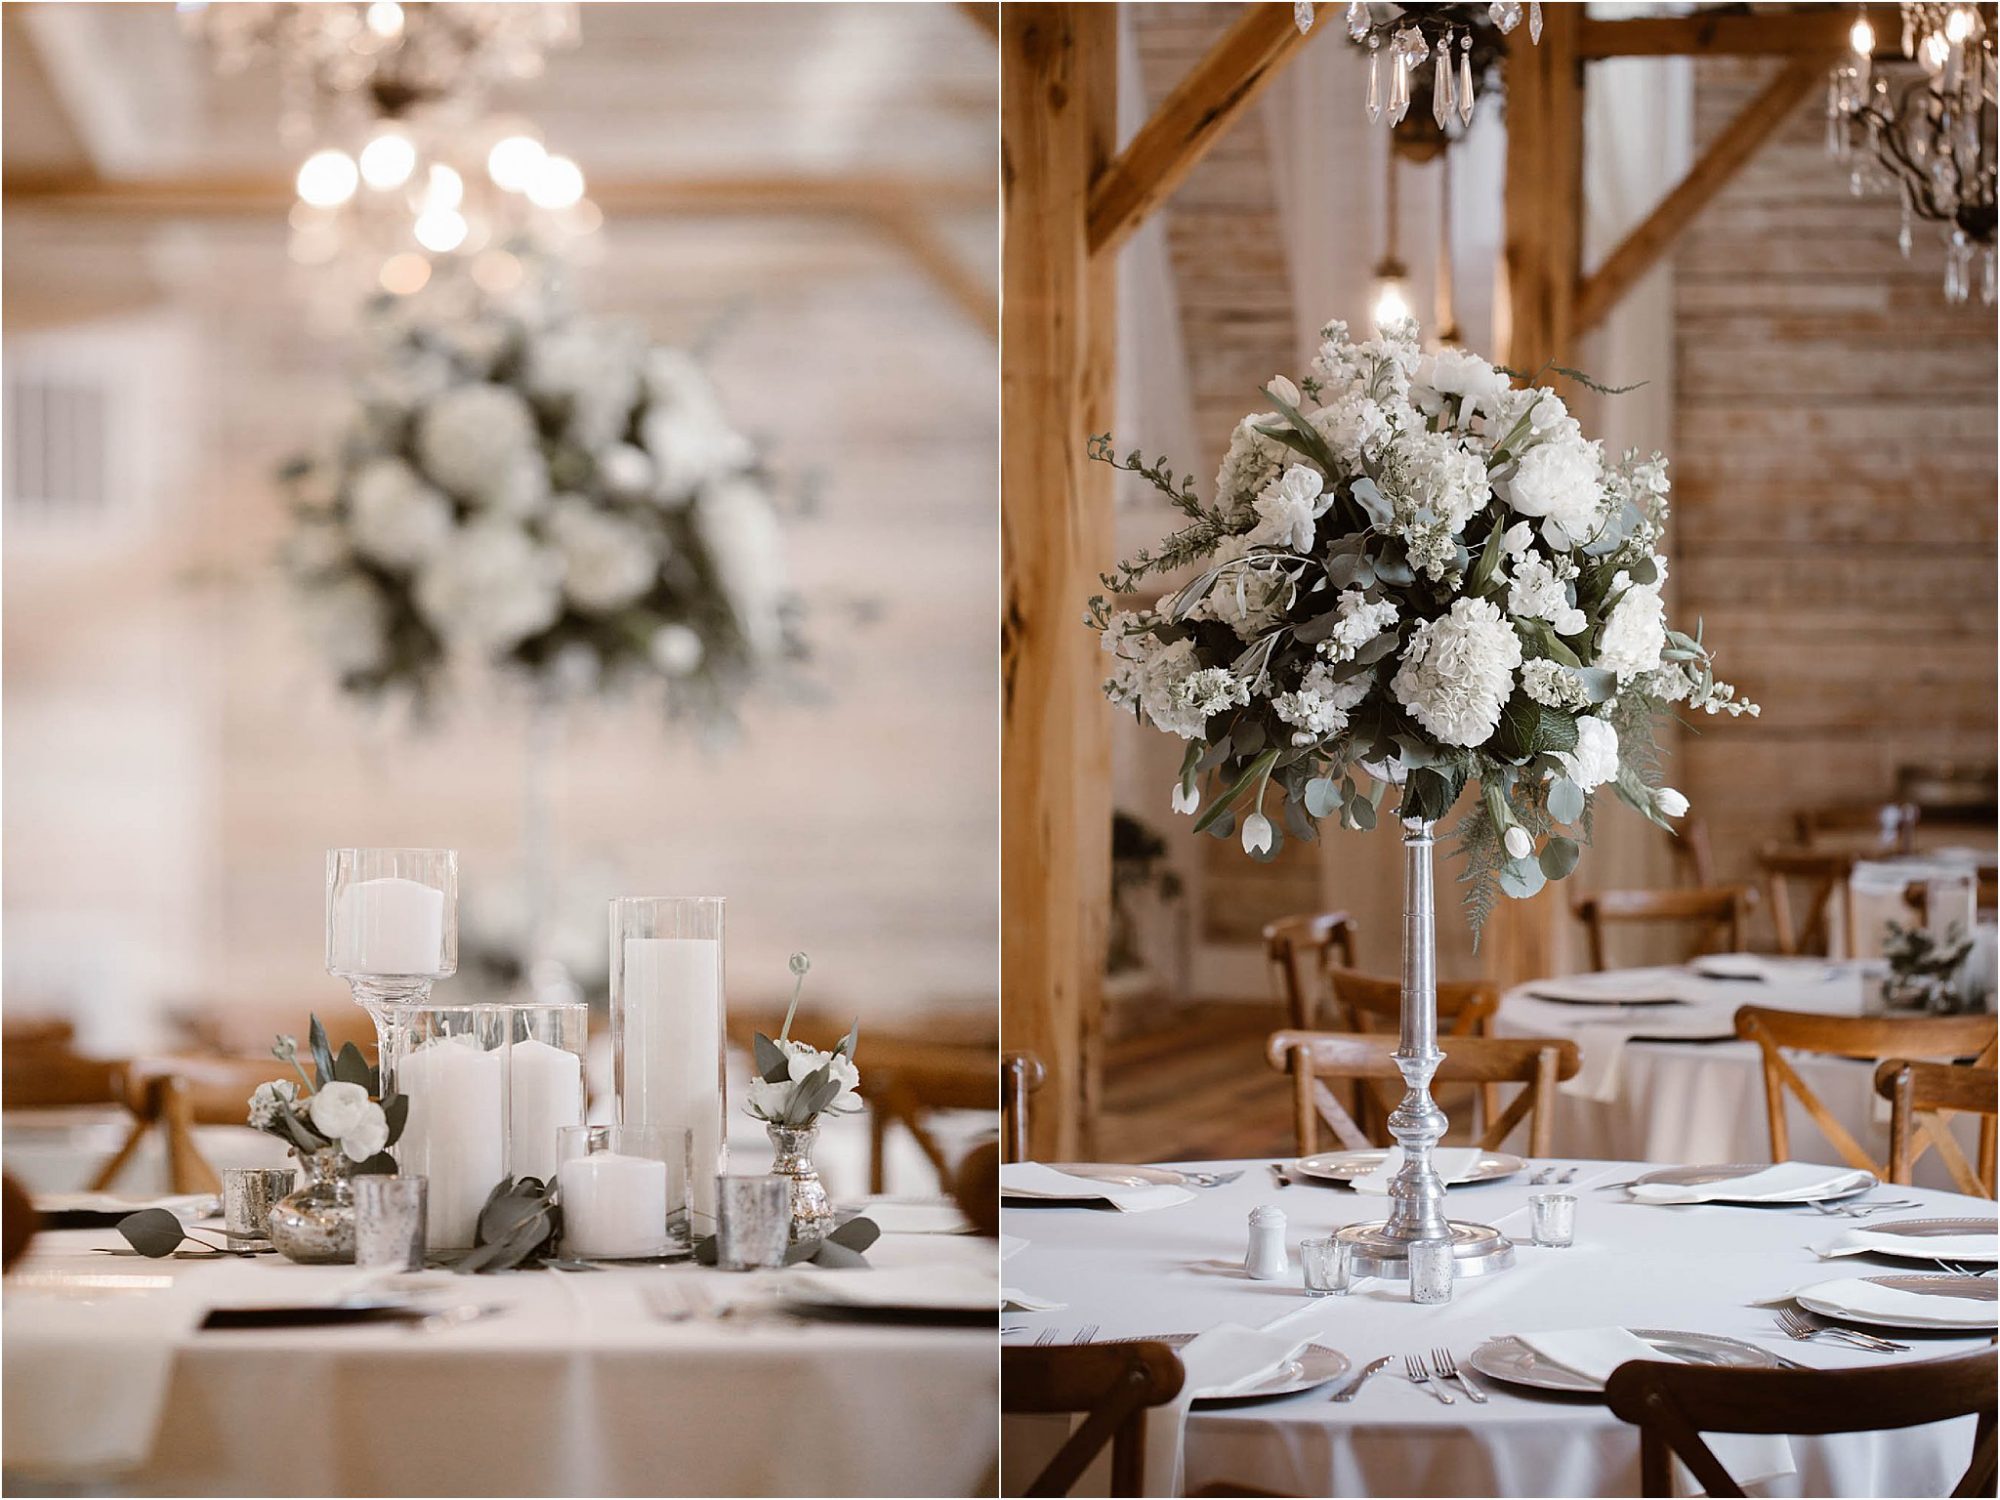 tablescape details for a wedding reception